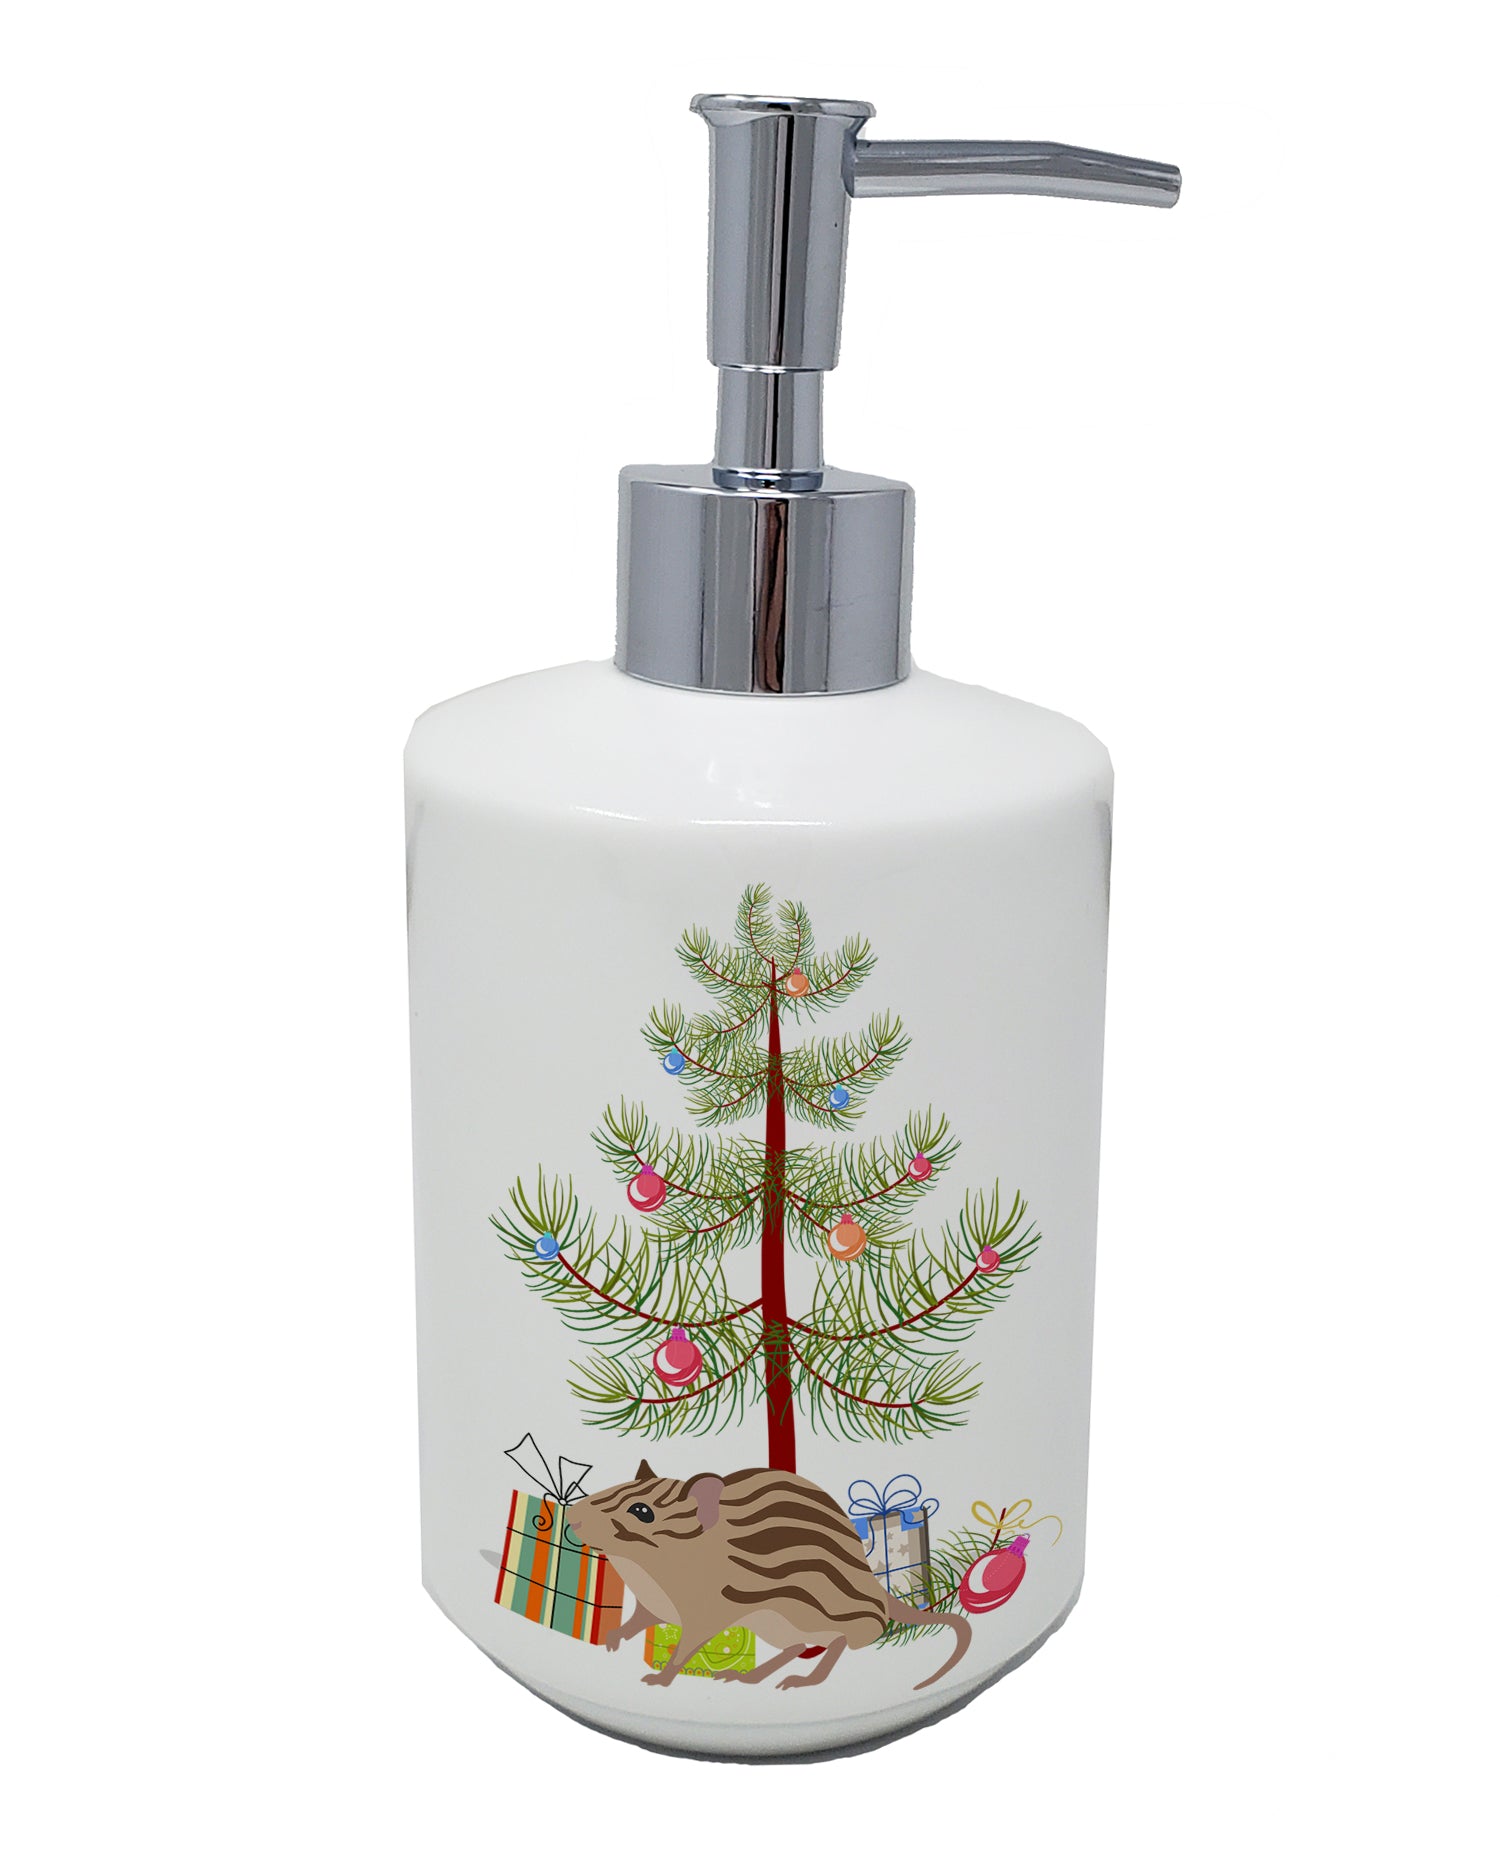 Buy this Zebra Mouse Merry Christmas Ceramic Soap Dispenser